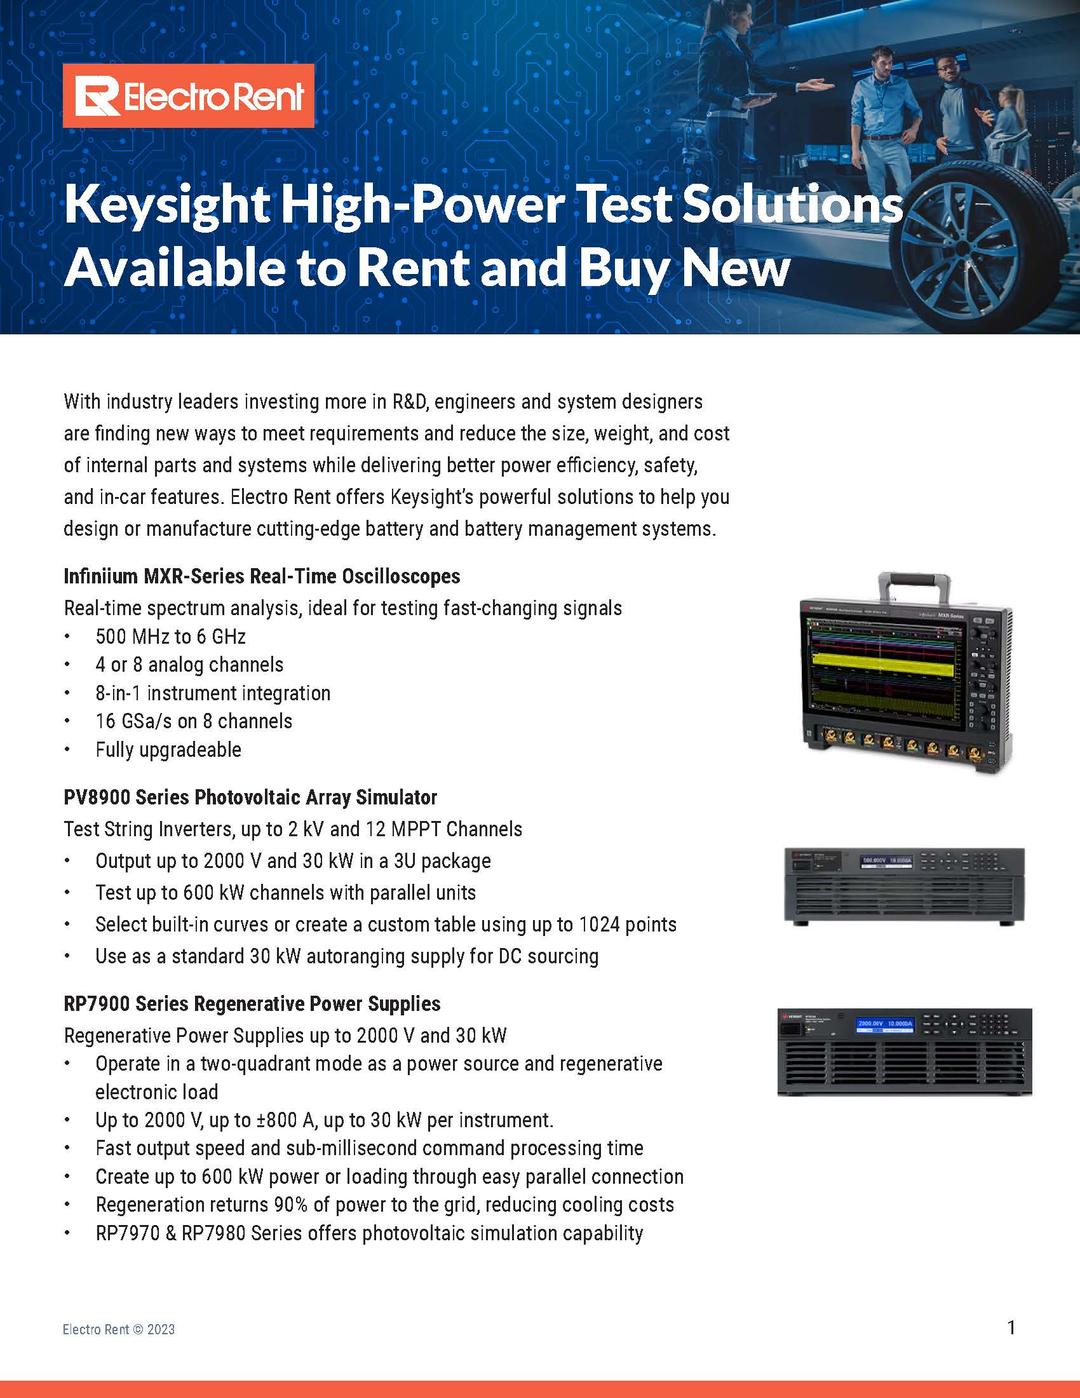 Keysight High-Power Test Solutions, image